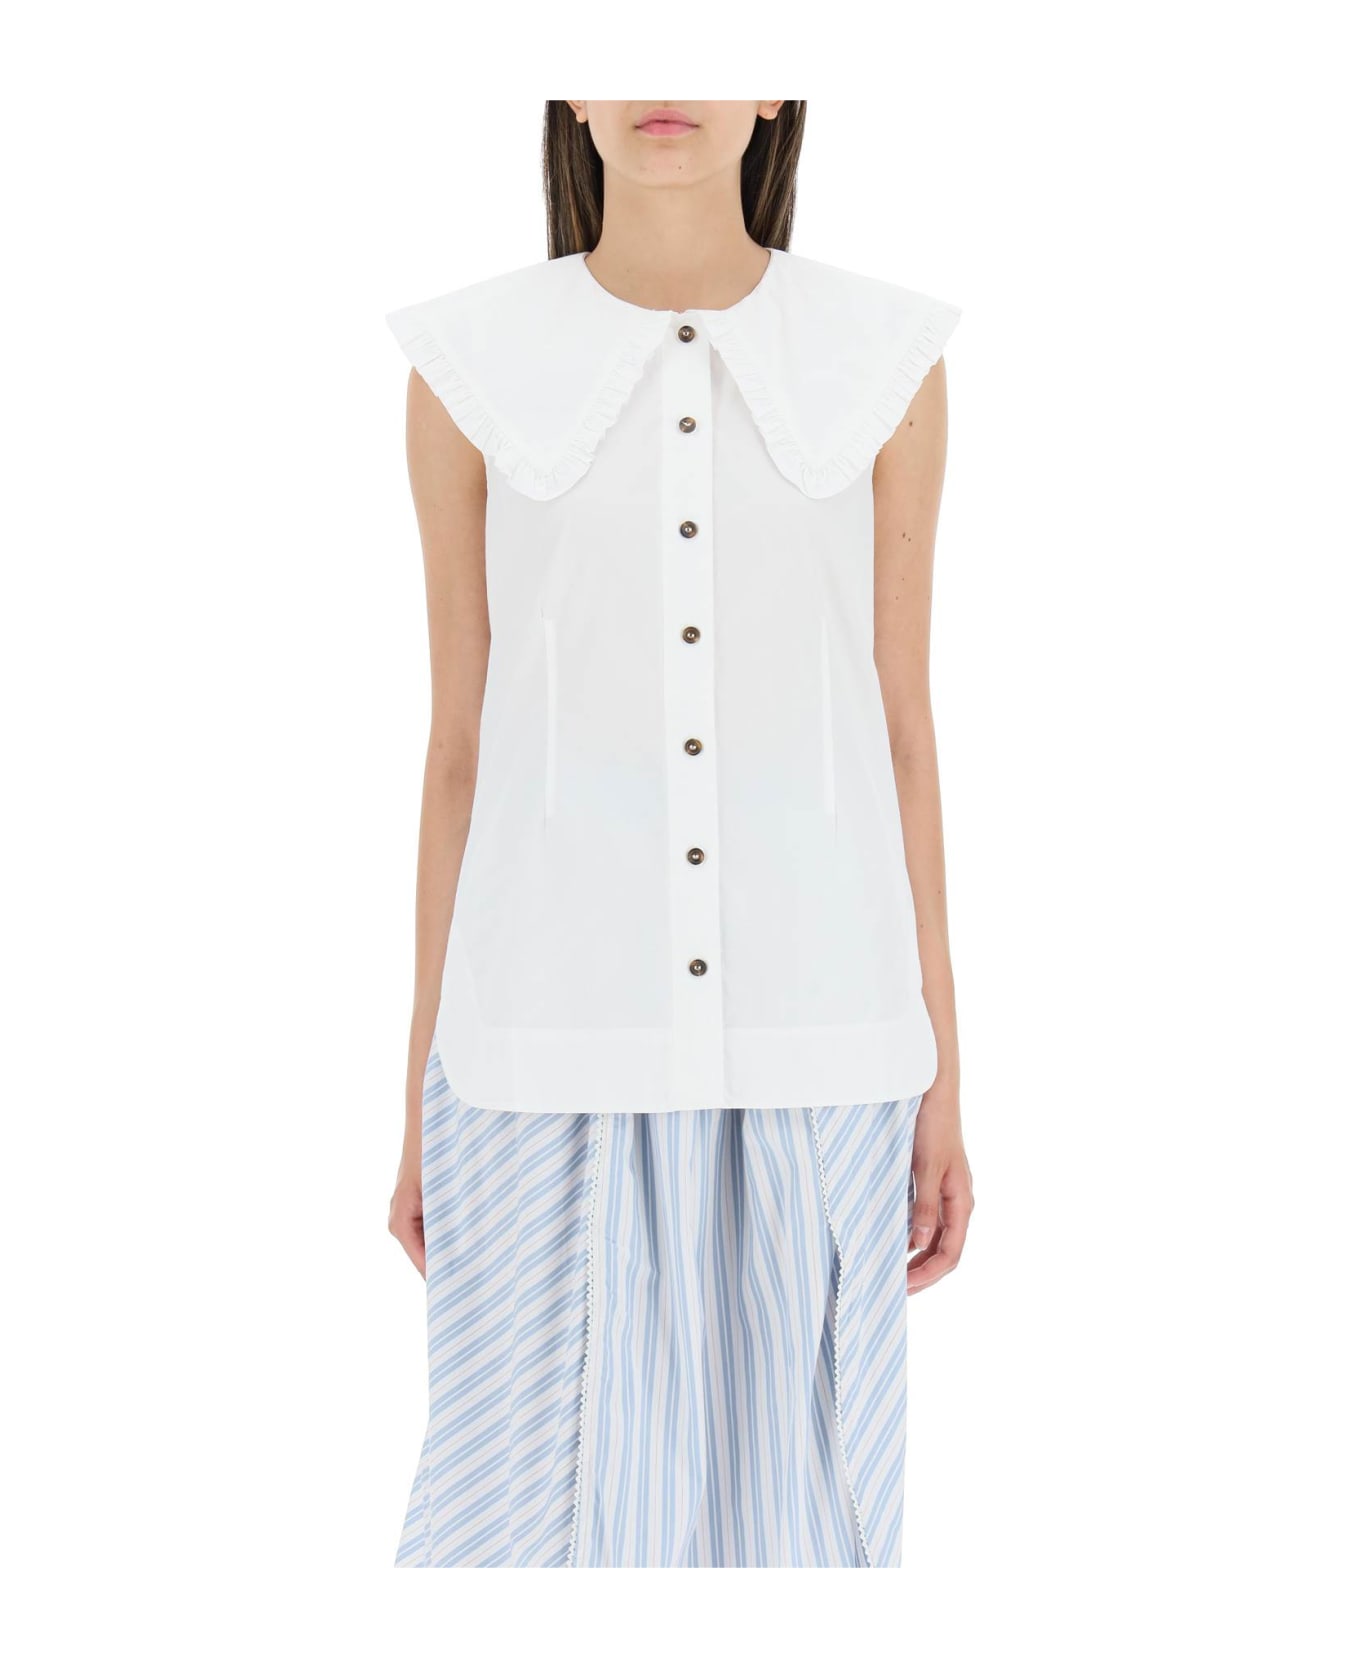 Ganni Cotton Sleeveless Shirt With Oversized Collar